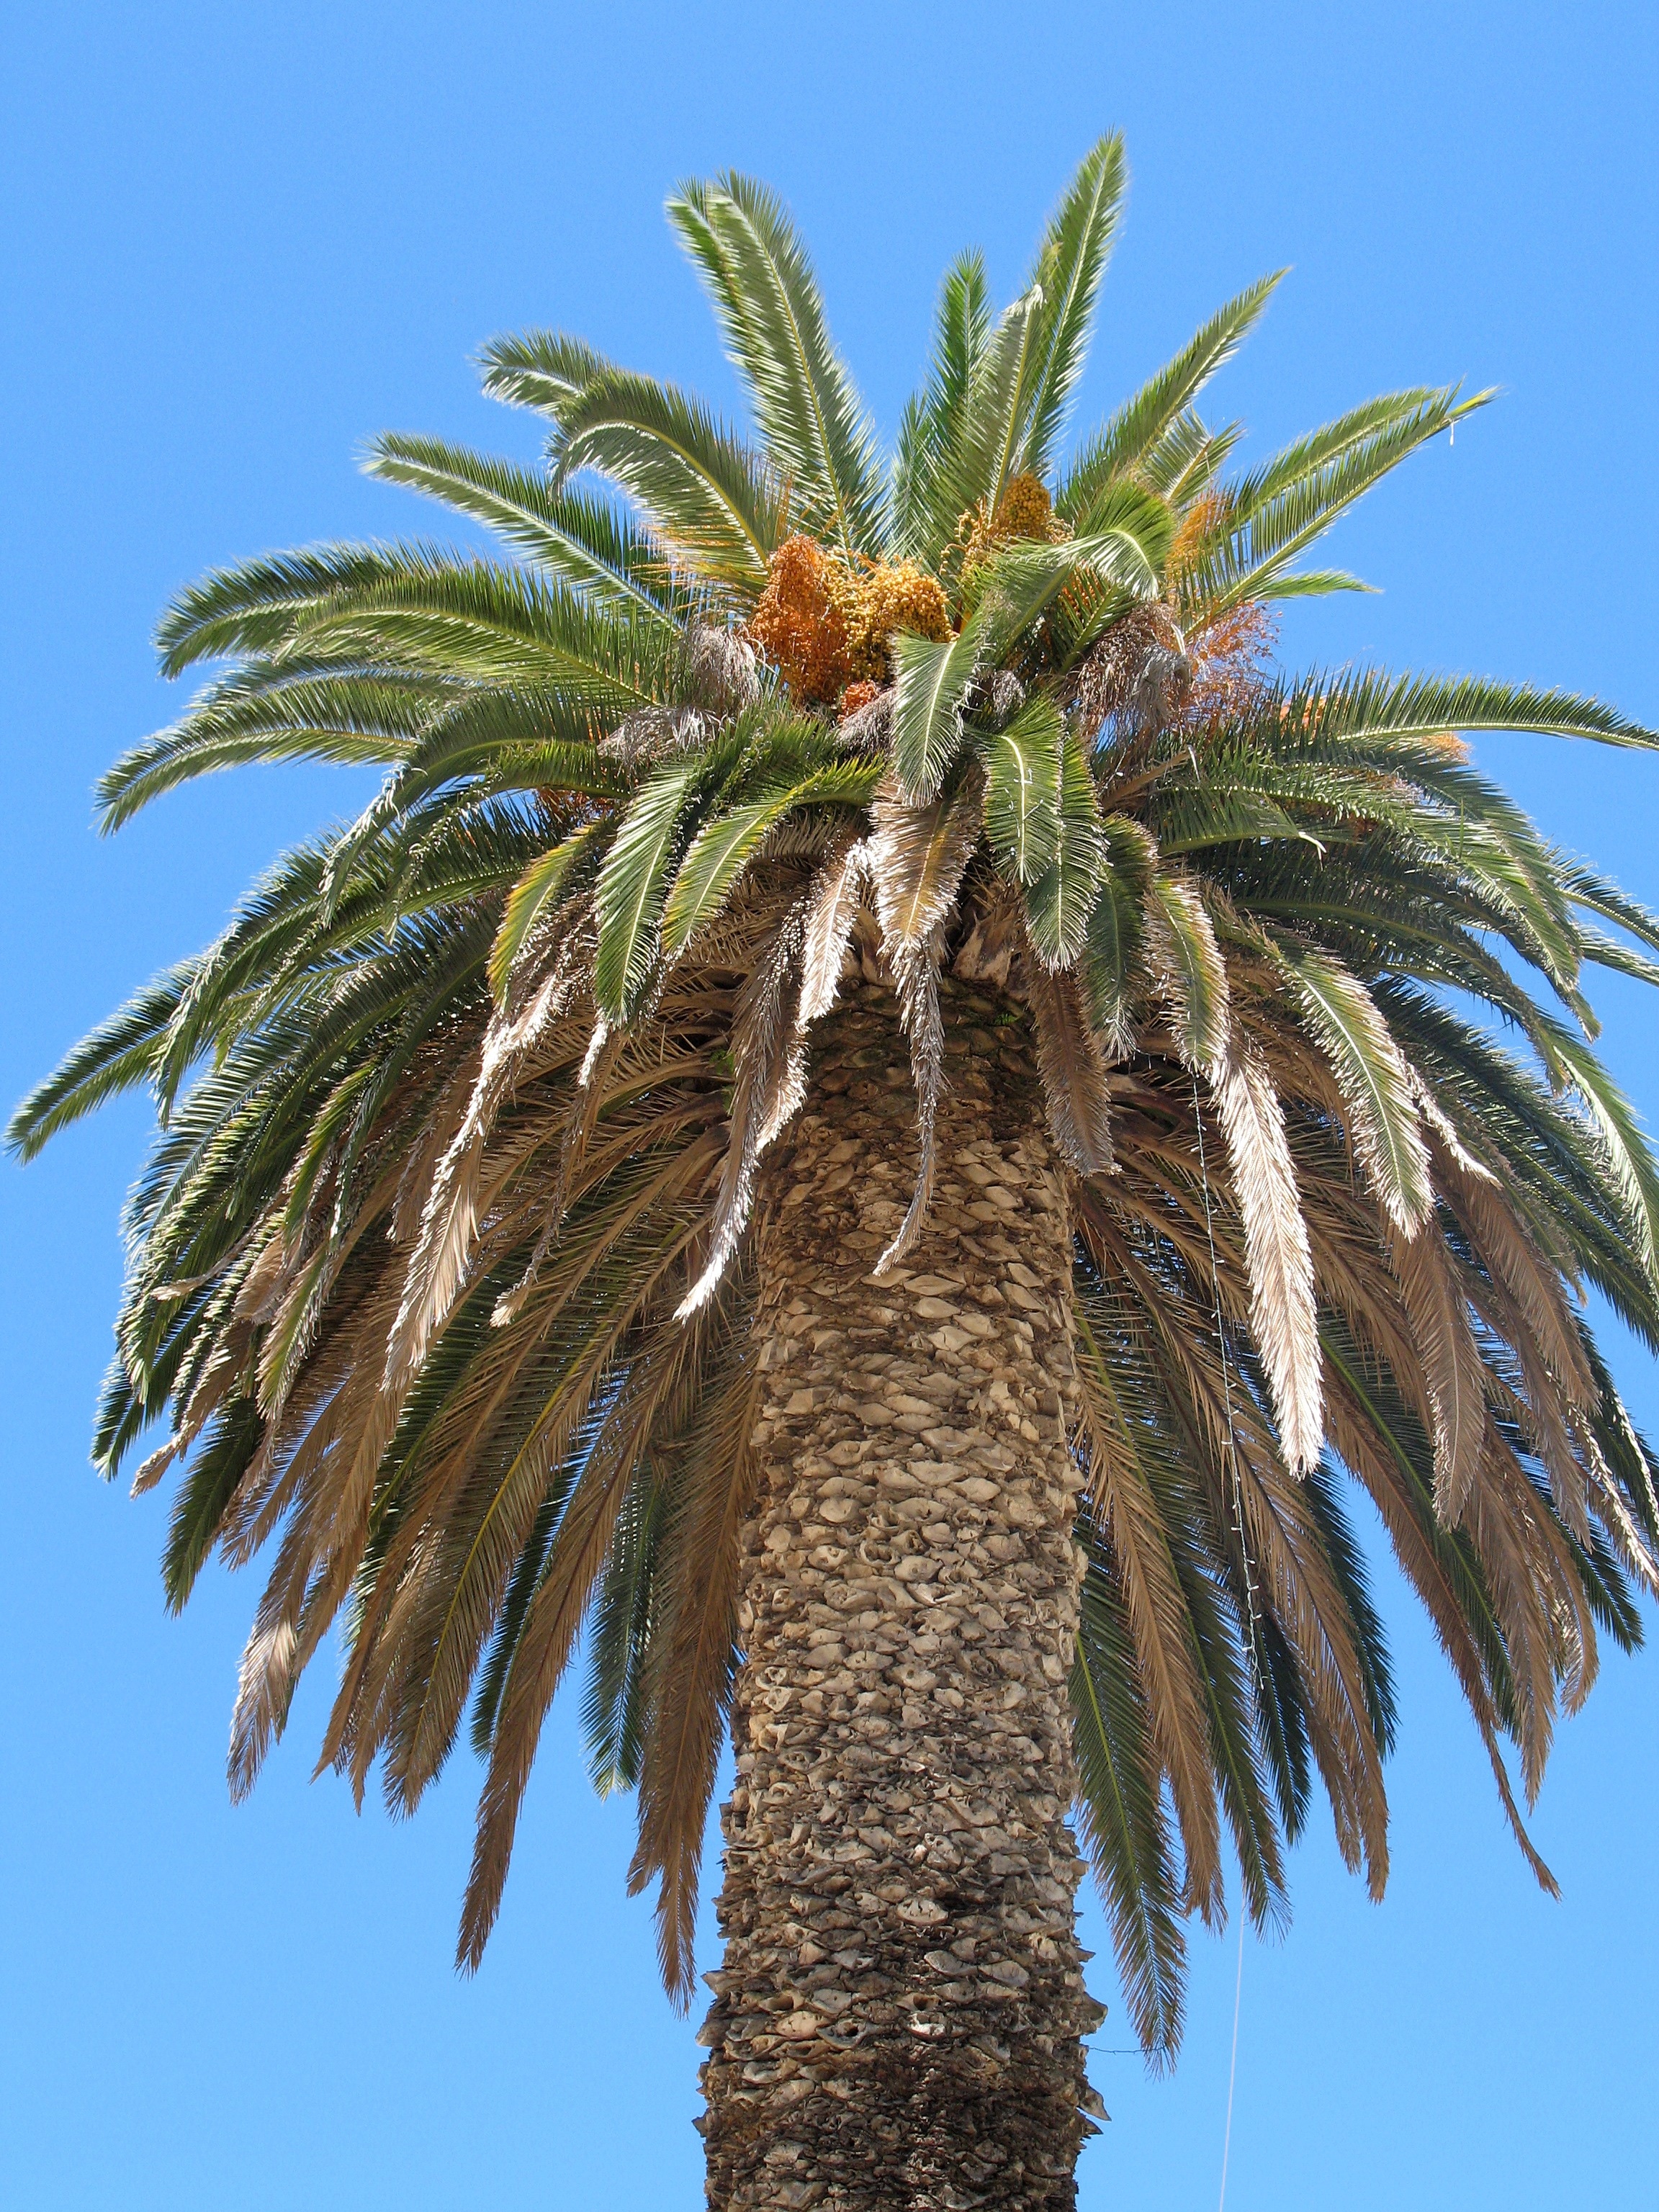 sago palm tree